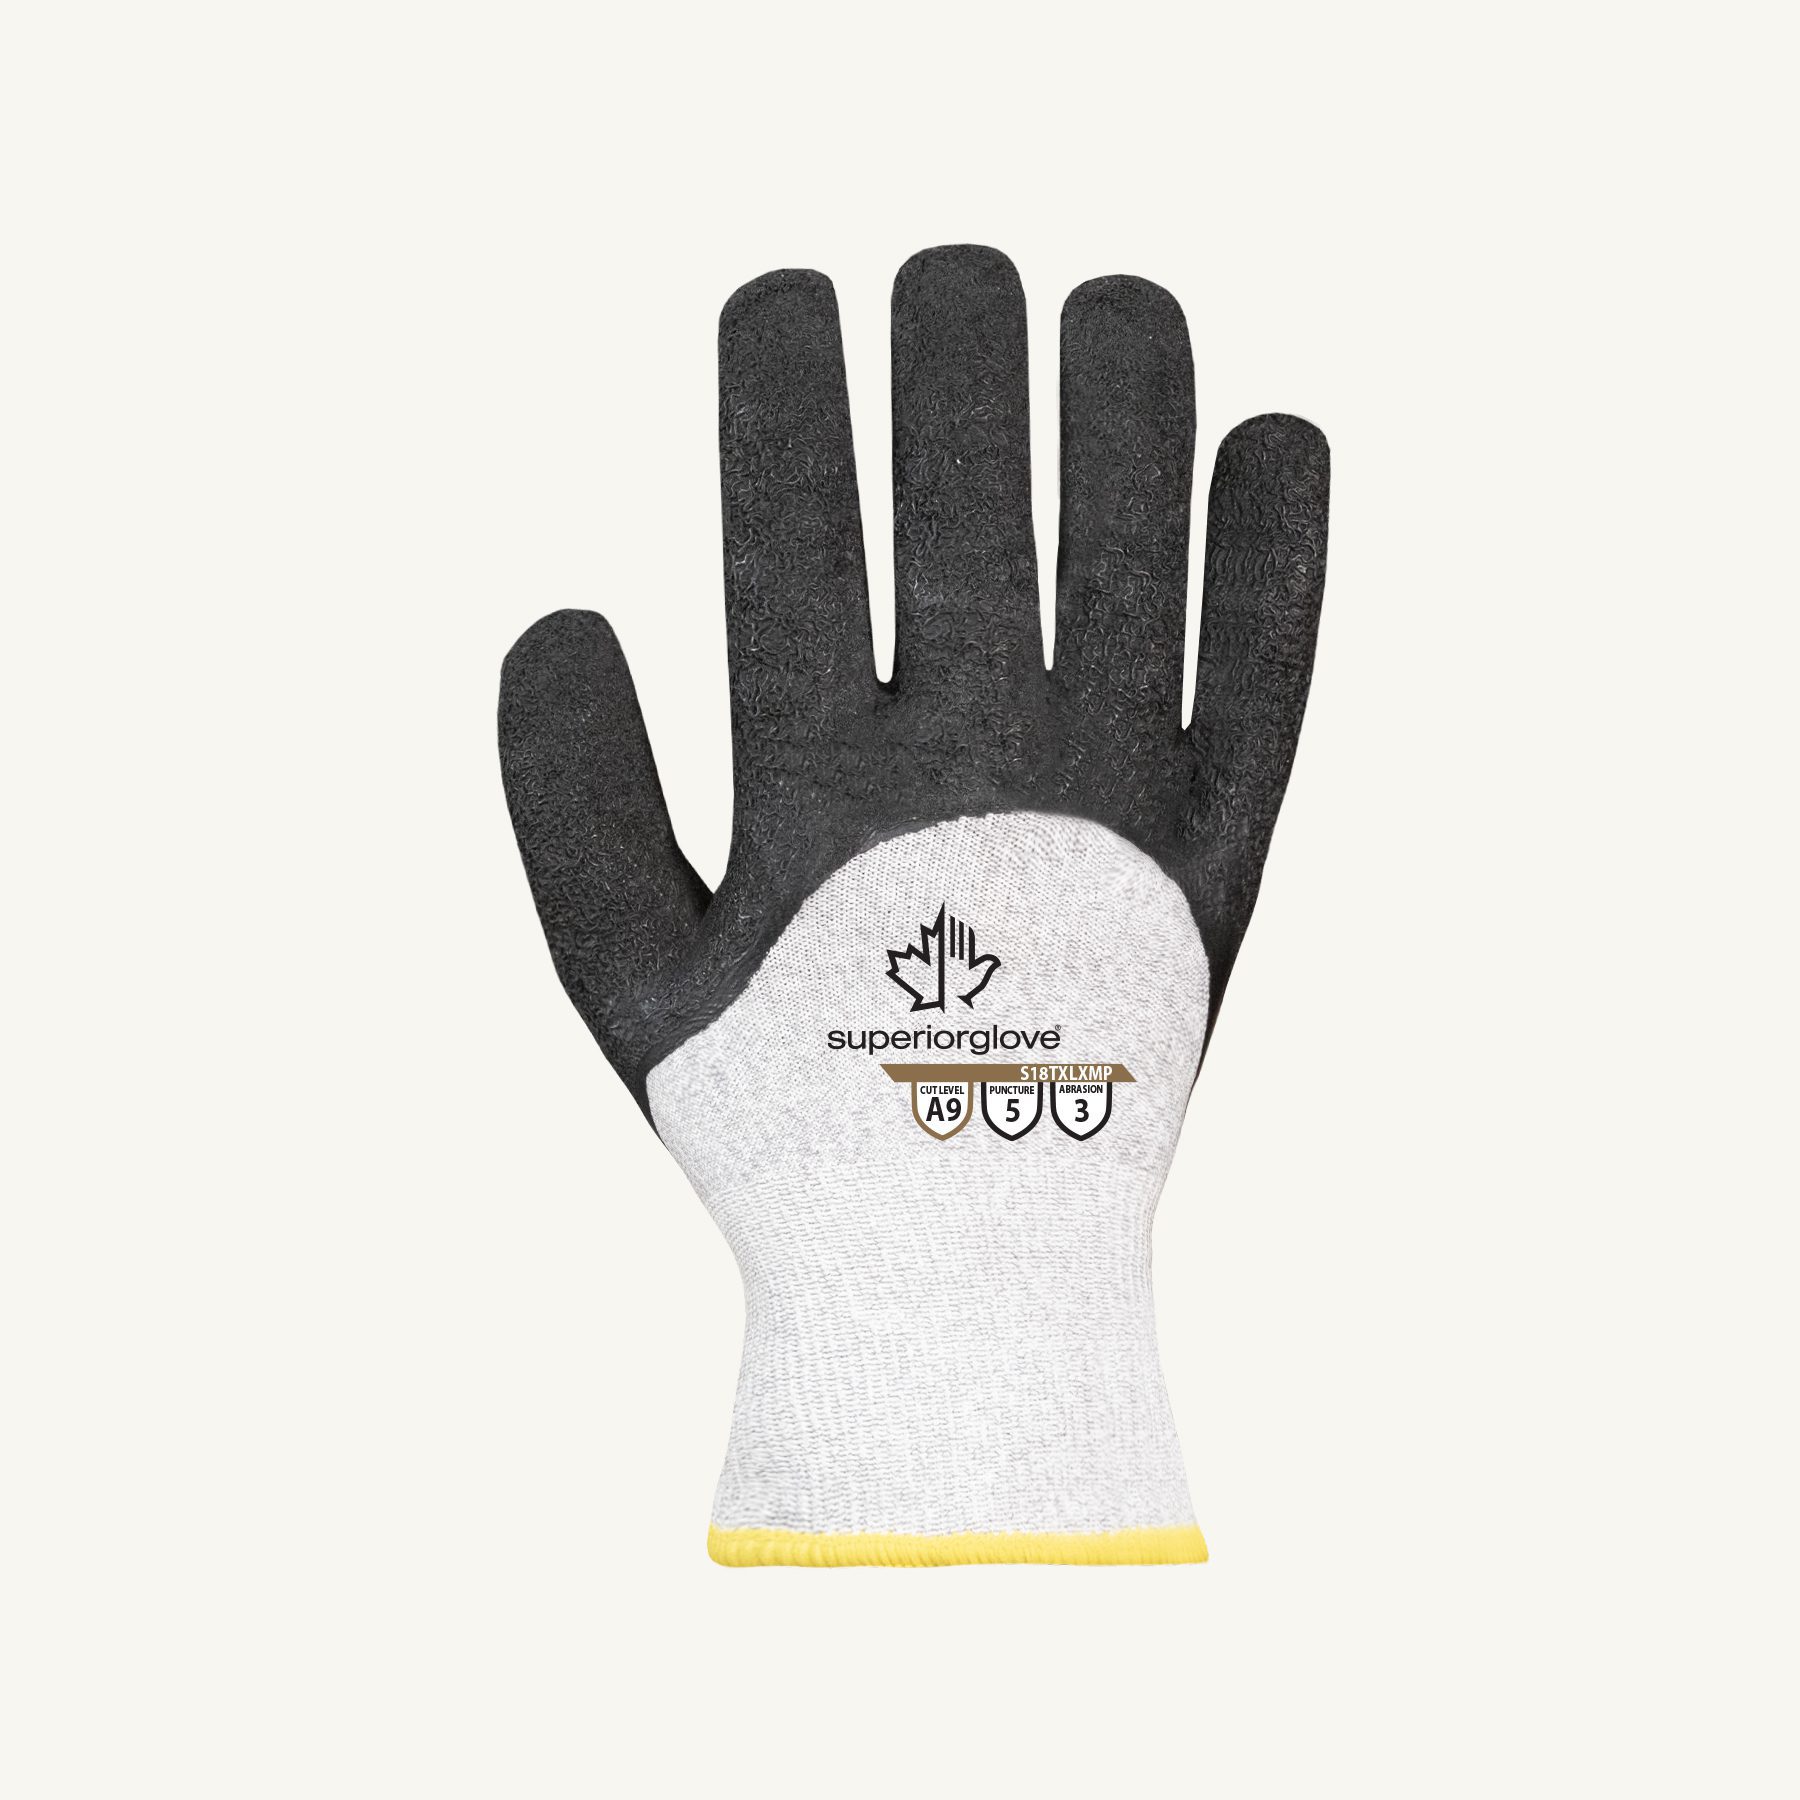 Superior Glove® TenActiv™ S18TXLXMP Latex Coated Hypodermic Resistant A9 Gloves